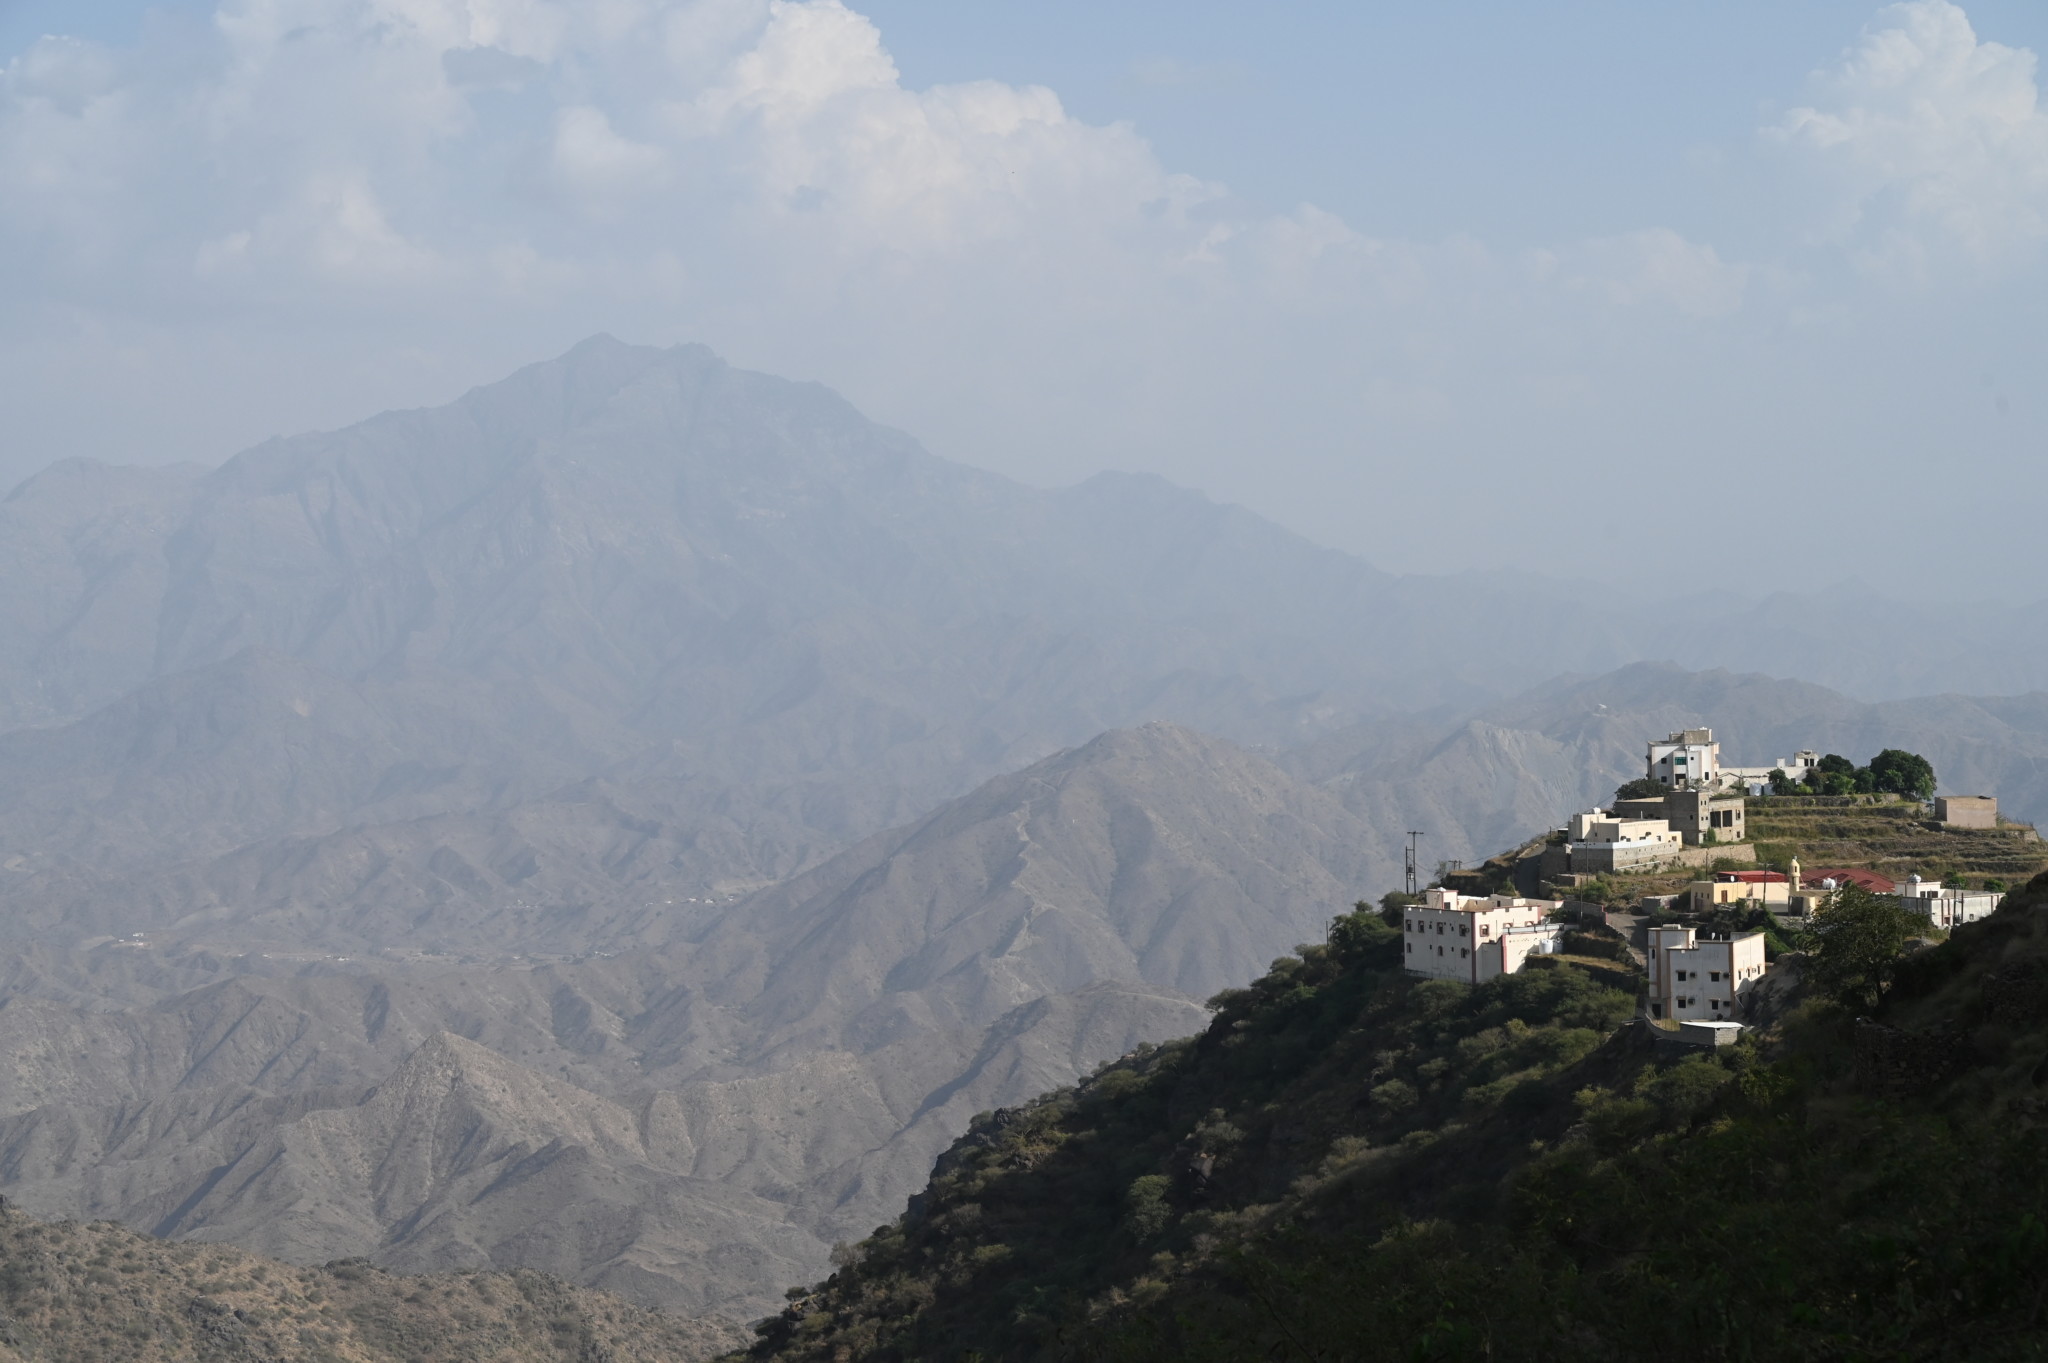 Die Fayfa Mountains in Jizan gehören zum Saudi-Roadtrip dazu